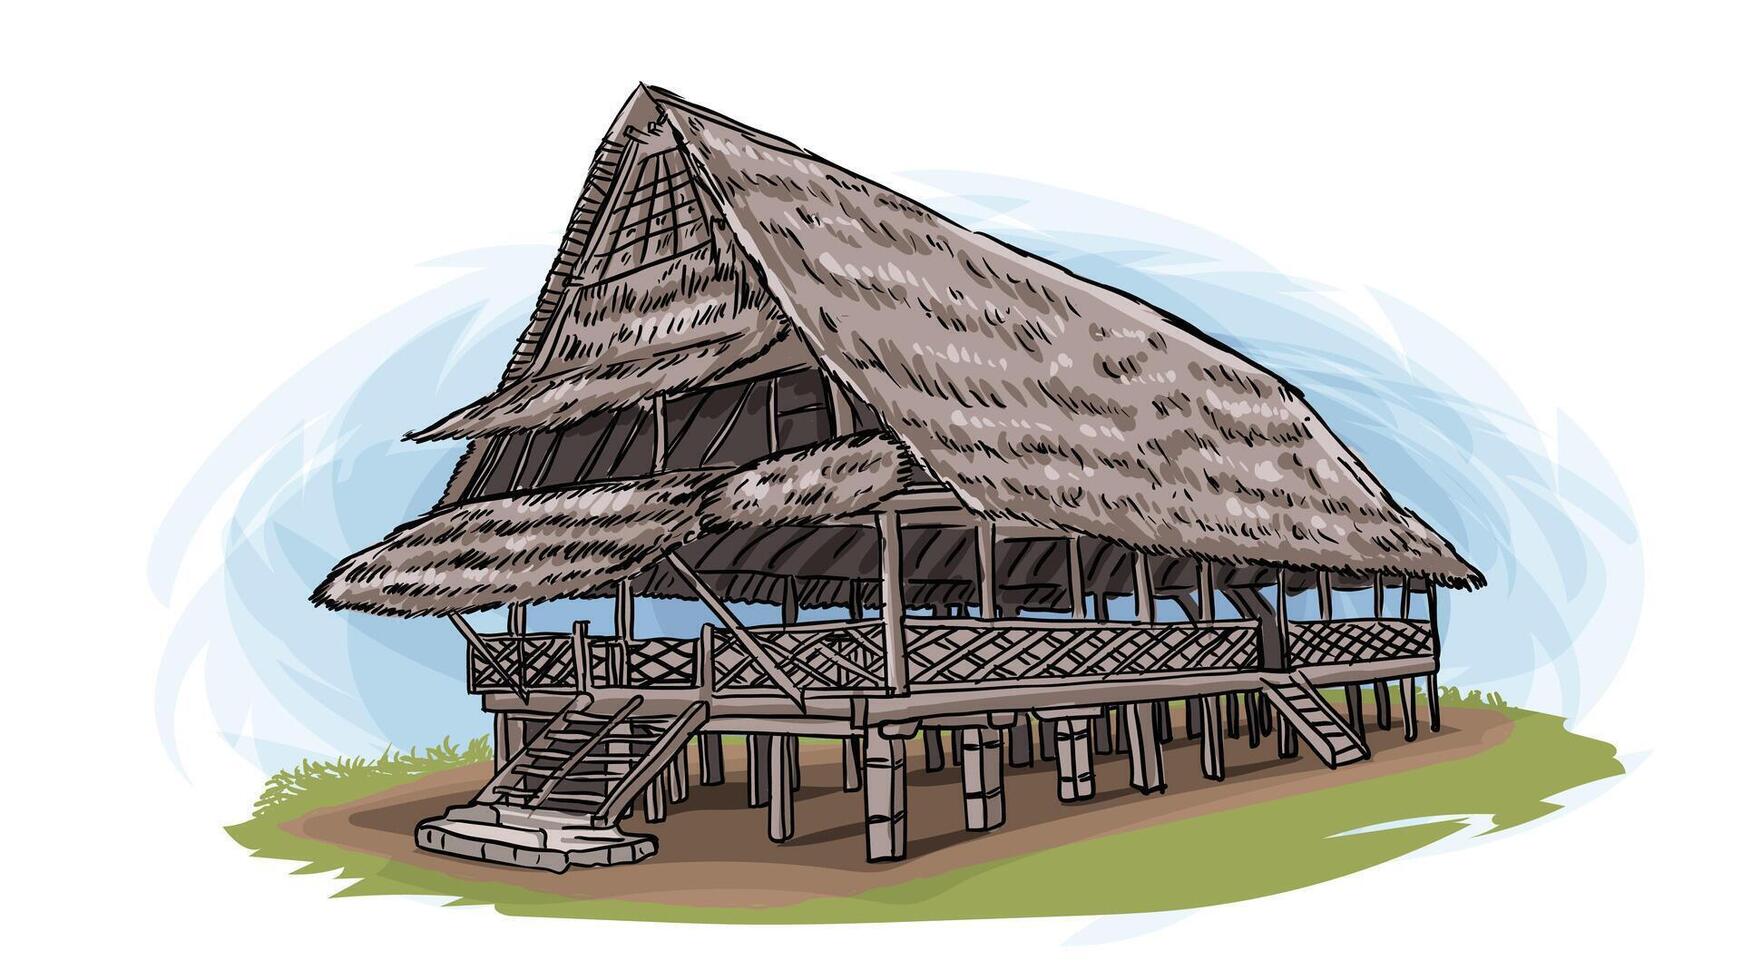 Rumah Baileo Traditional House of Maluku Indonesia Cartoon Hand Drawn Illustration vector